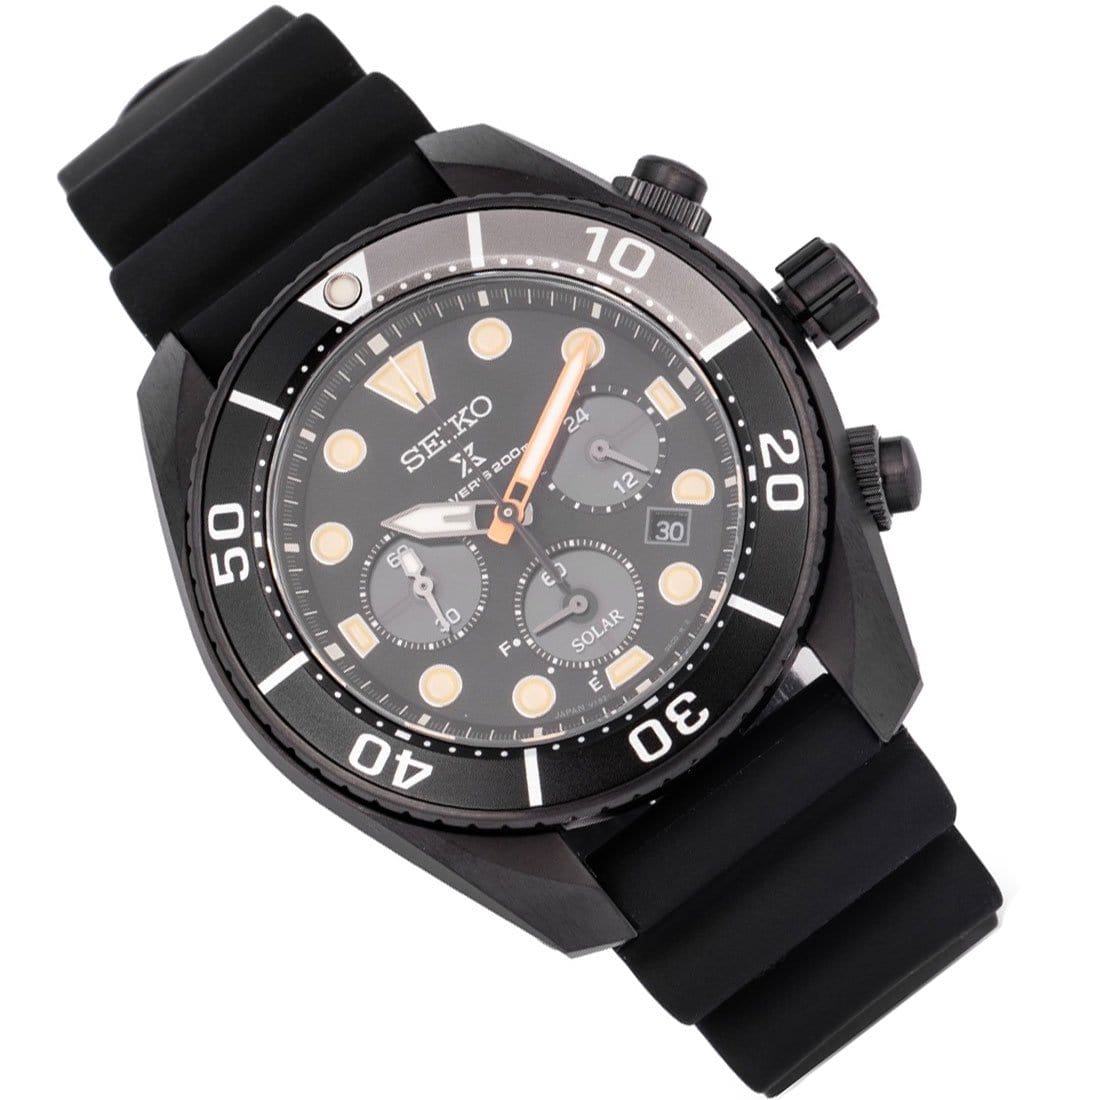 SBDL065 Seiko Prospex Black Series SUMO Solar Limited Edition JDM Watch